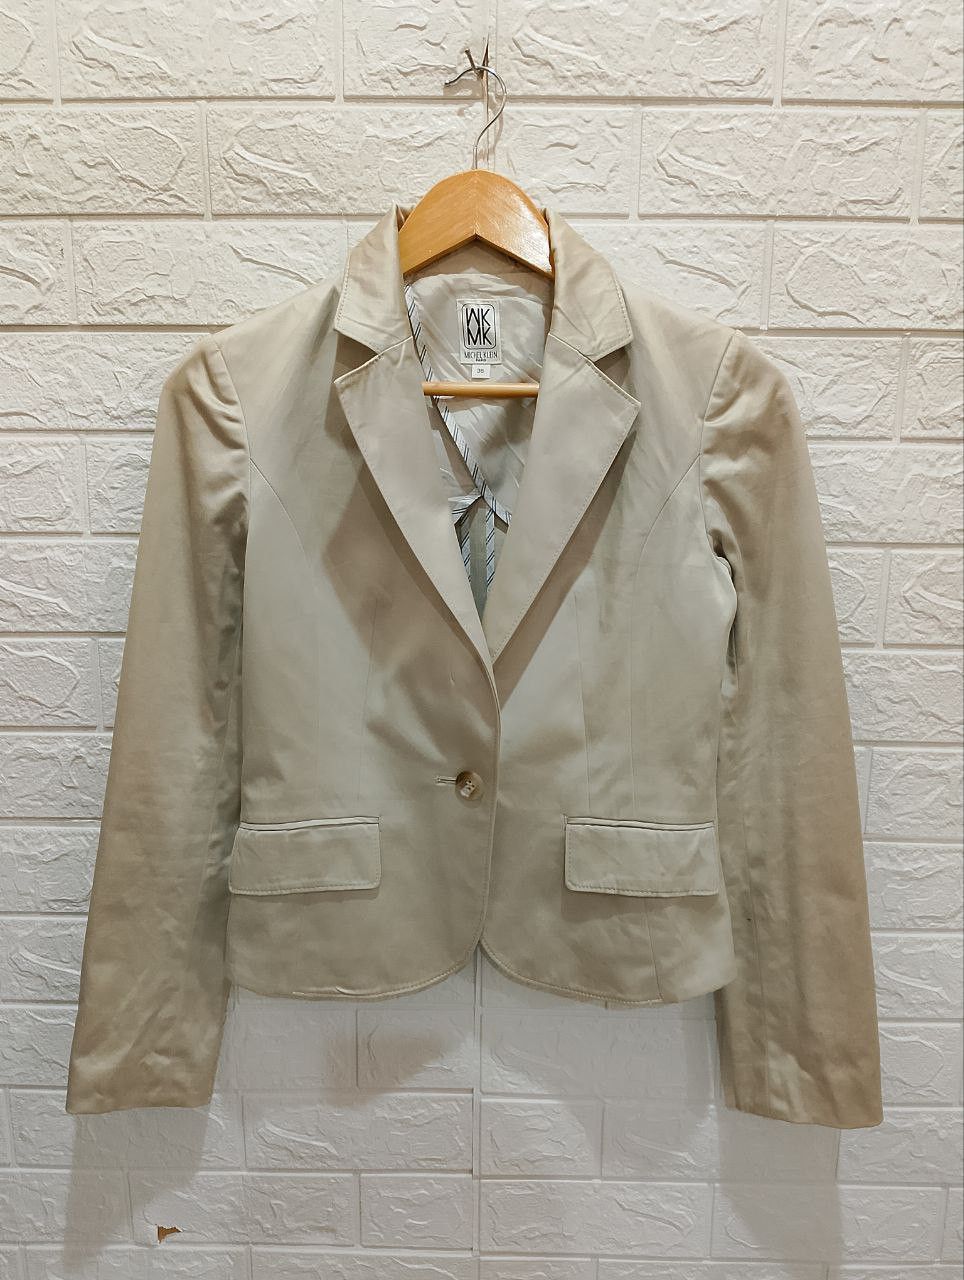 Archival Clothing - MK Michel Klein Paris Single Breast Casual Suit Coat Blazer - 2